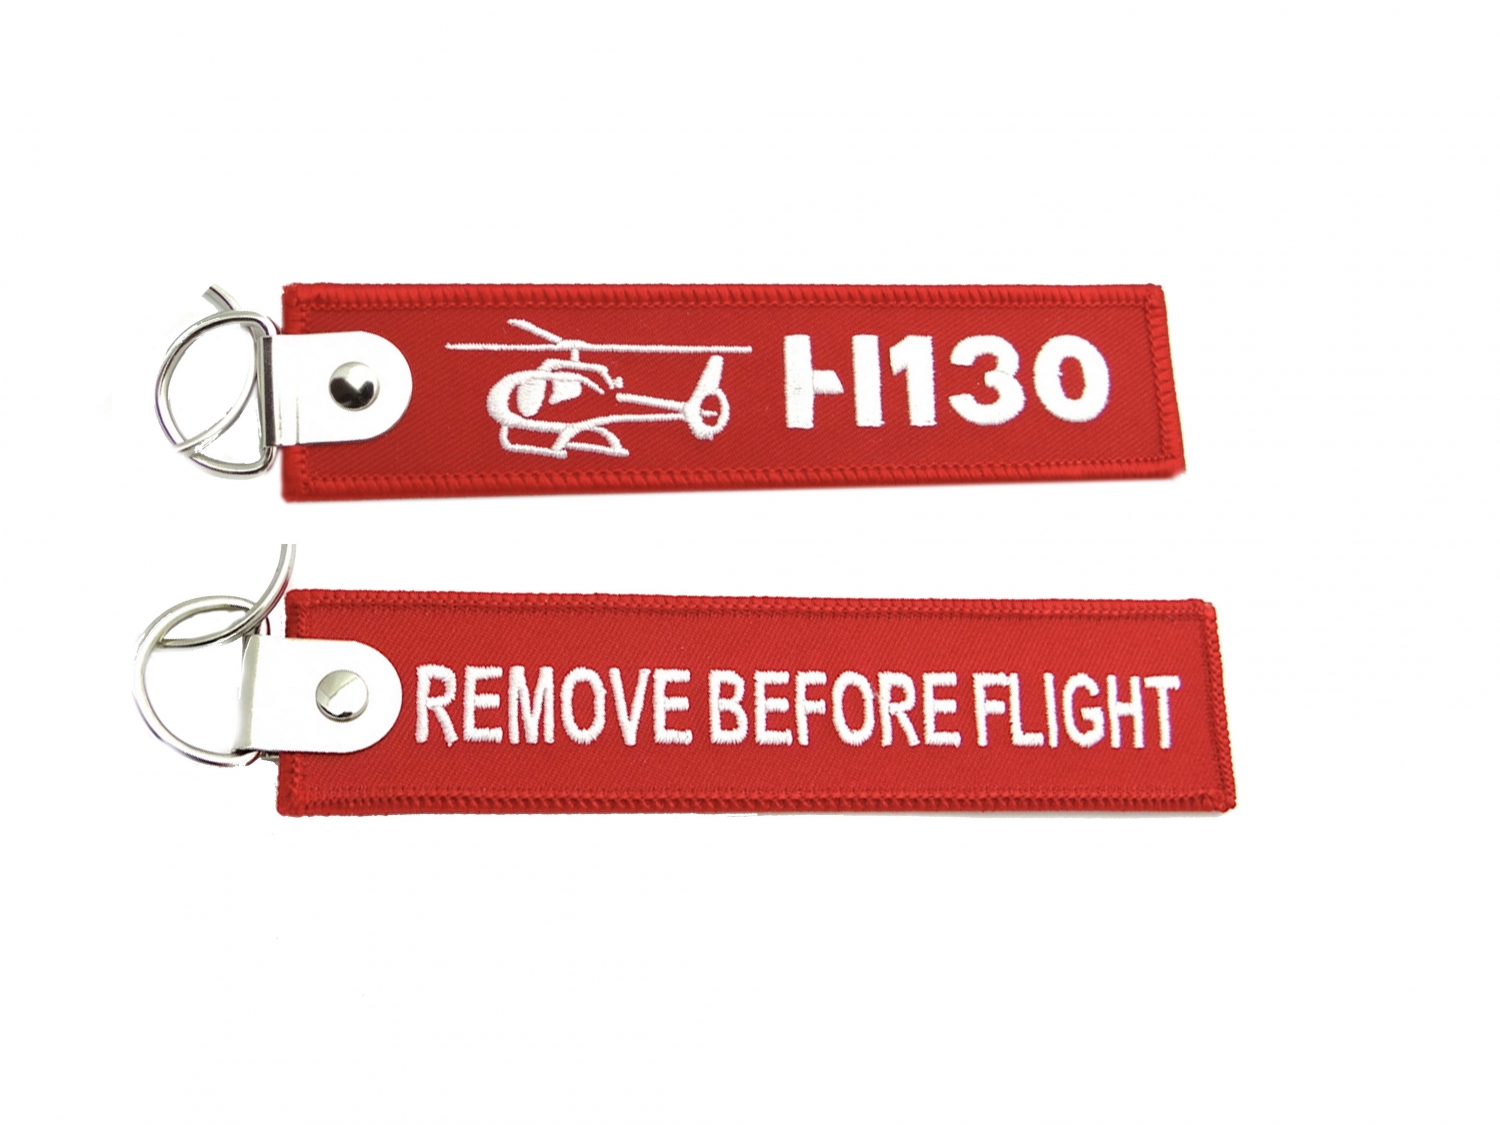 Брелок  REMOVE BEFORE FLIGHT-  H130